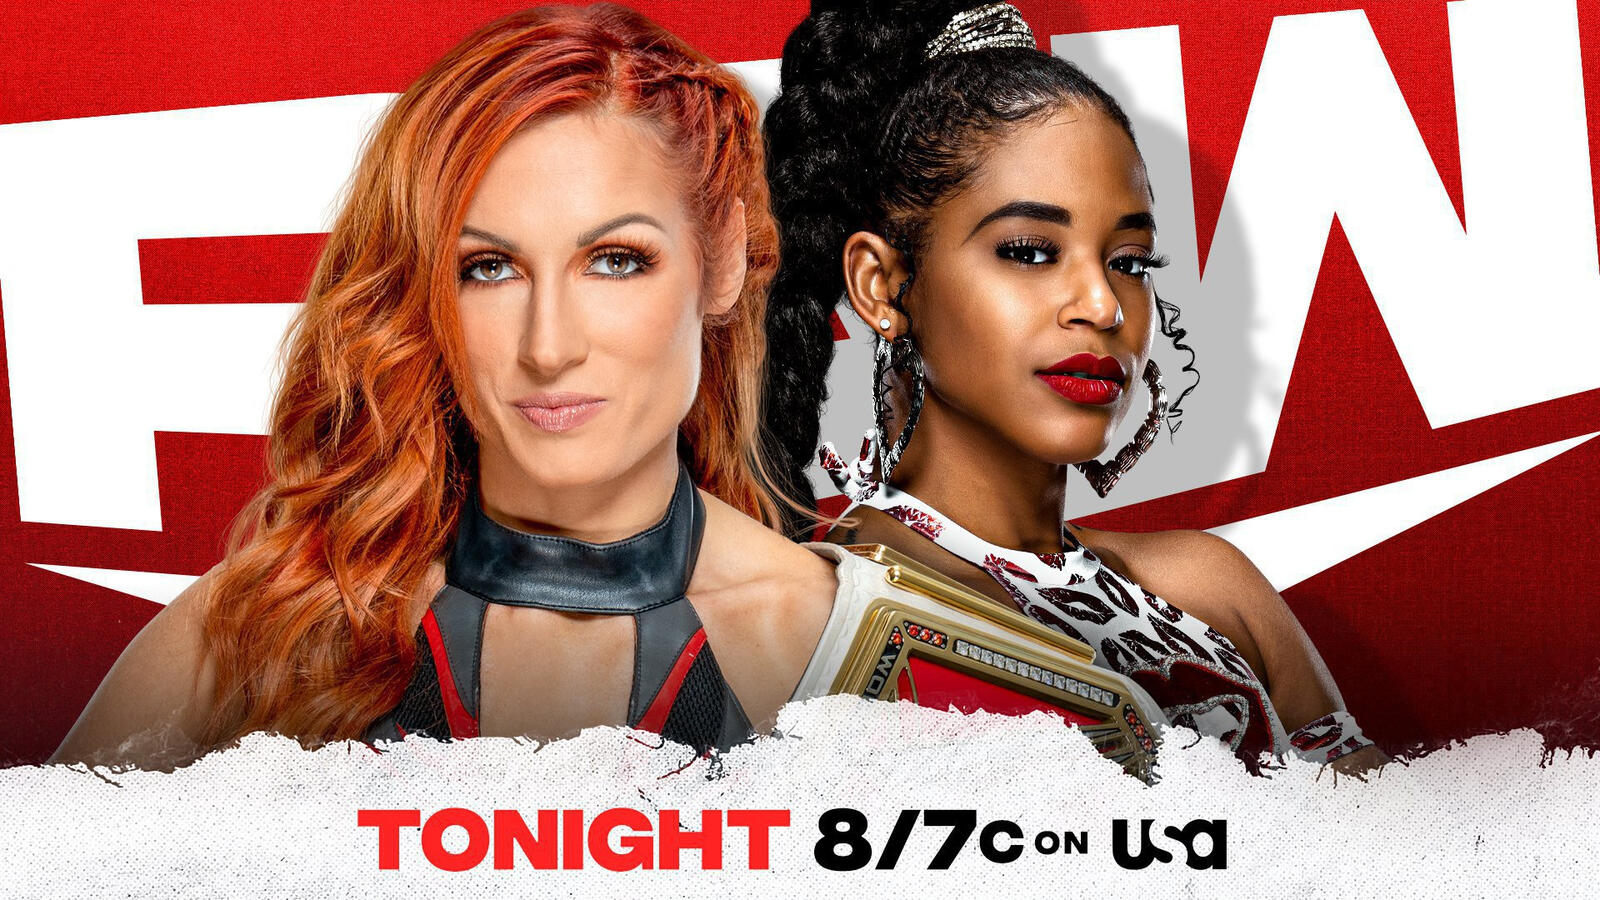 Women's Title Match To Open Tonight’s WWE RAW